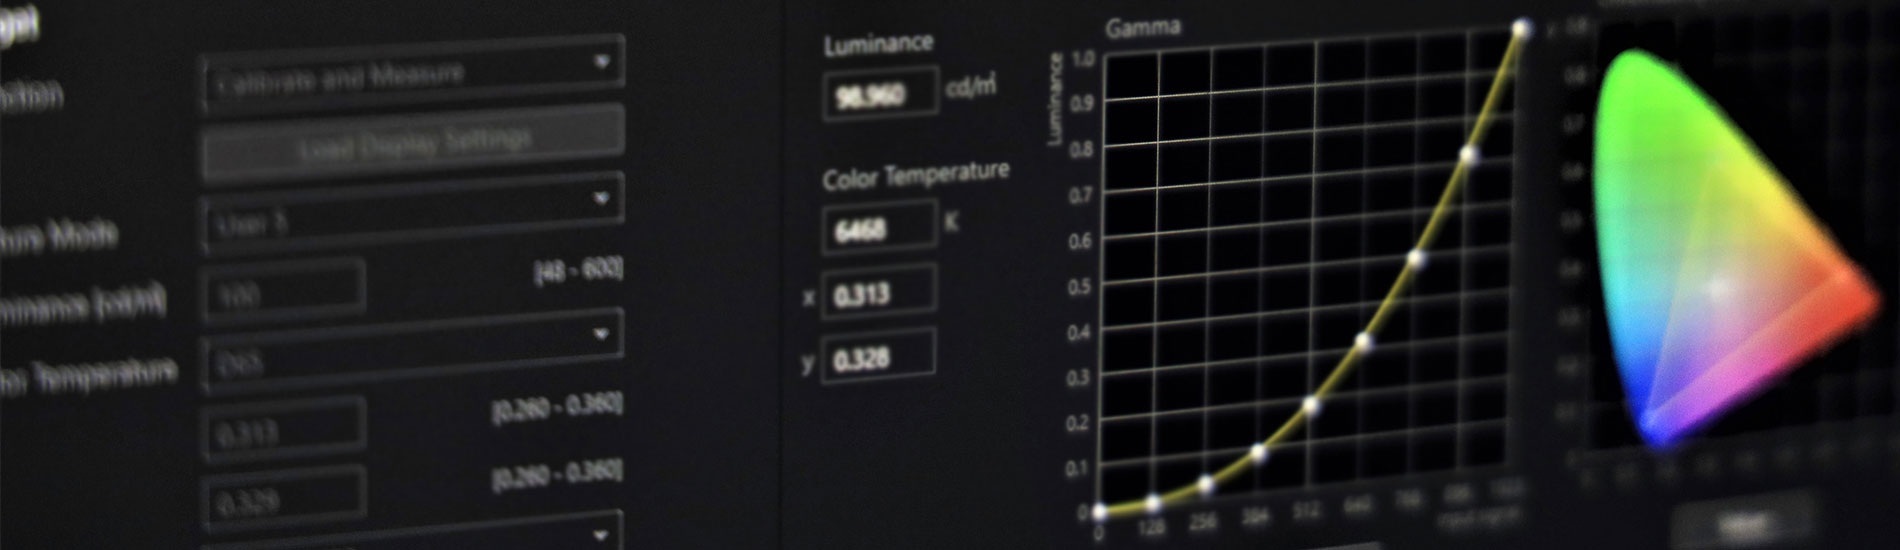 Color Calibration Services top banner - color bar screen and calibration screen